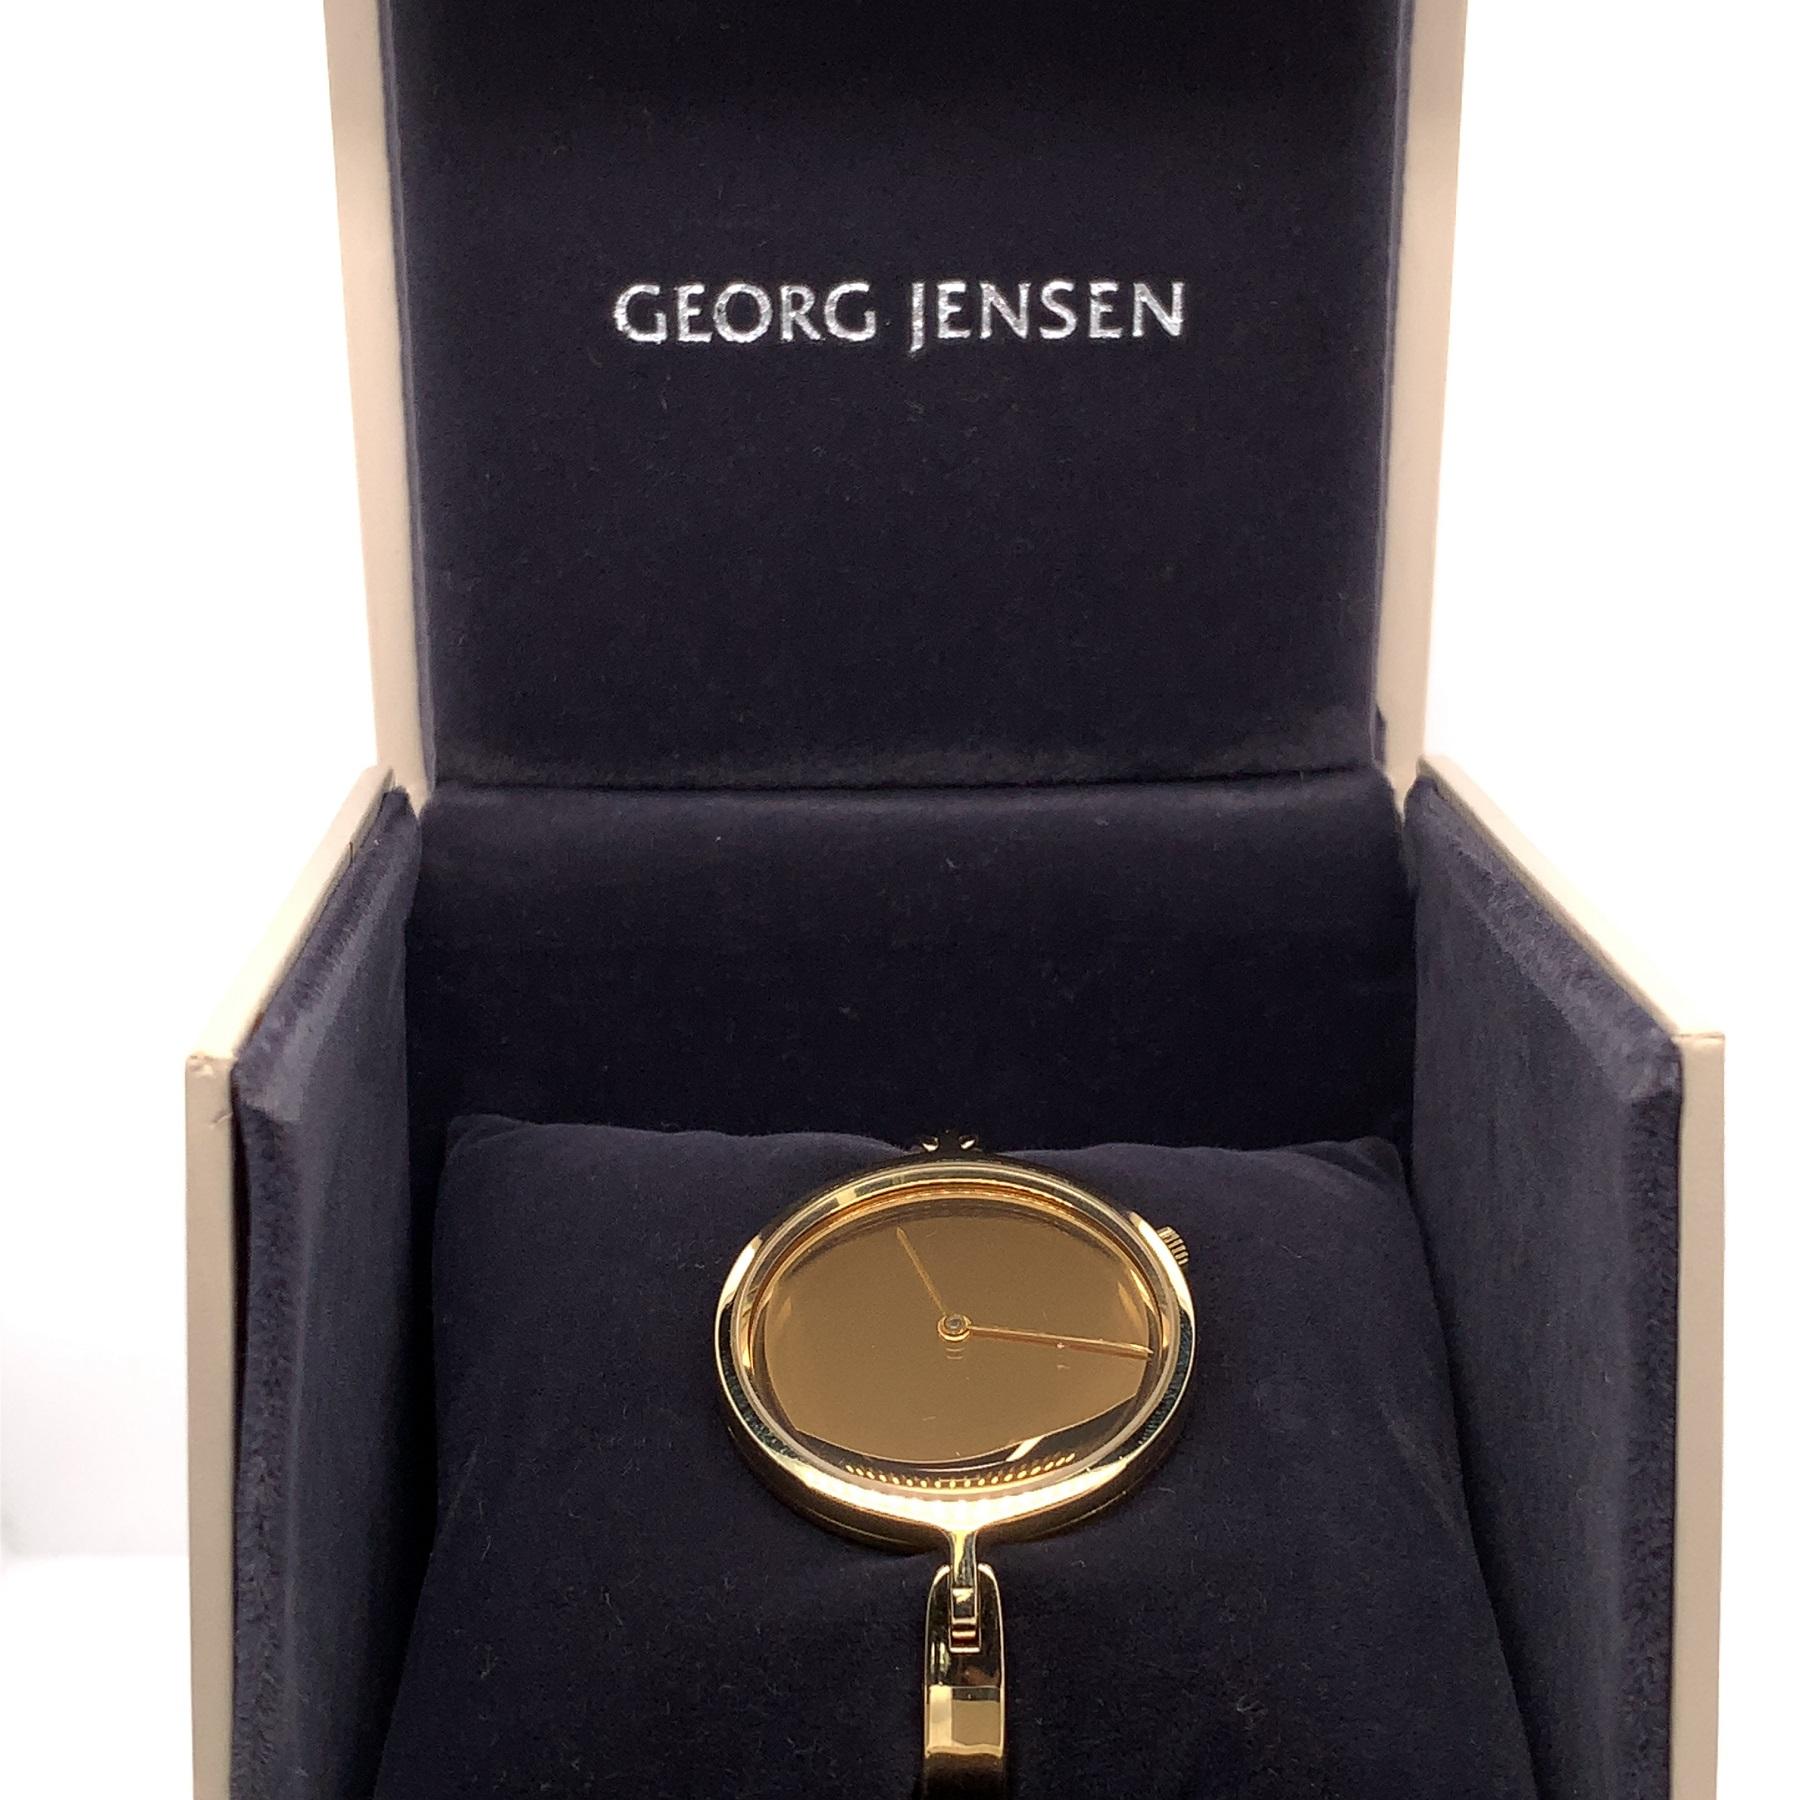 Georg Jensen 18K Yellow Gold Watch #1227 1